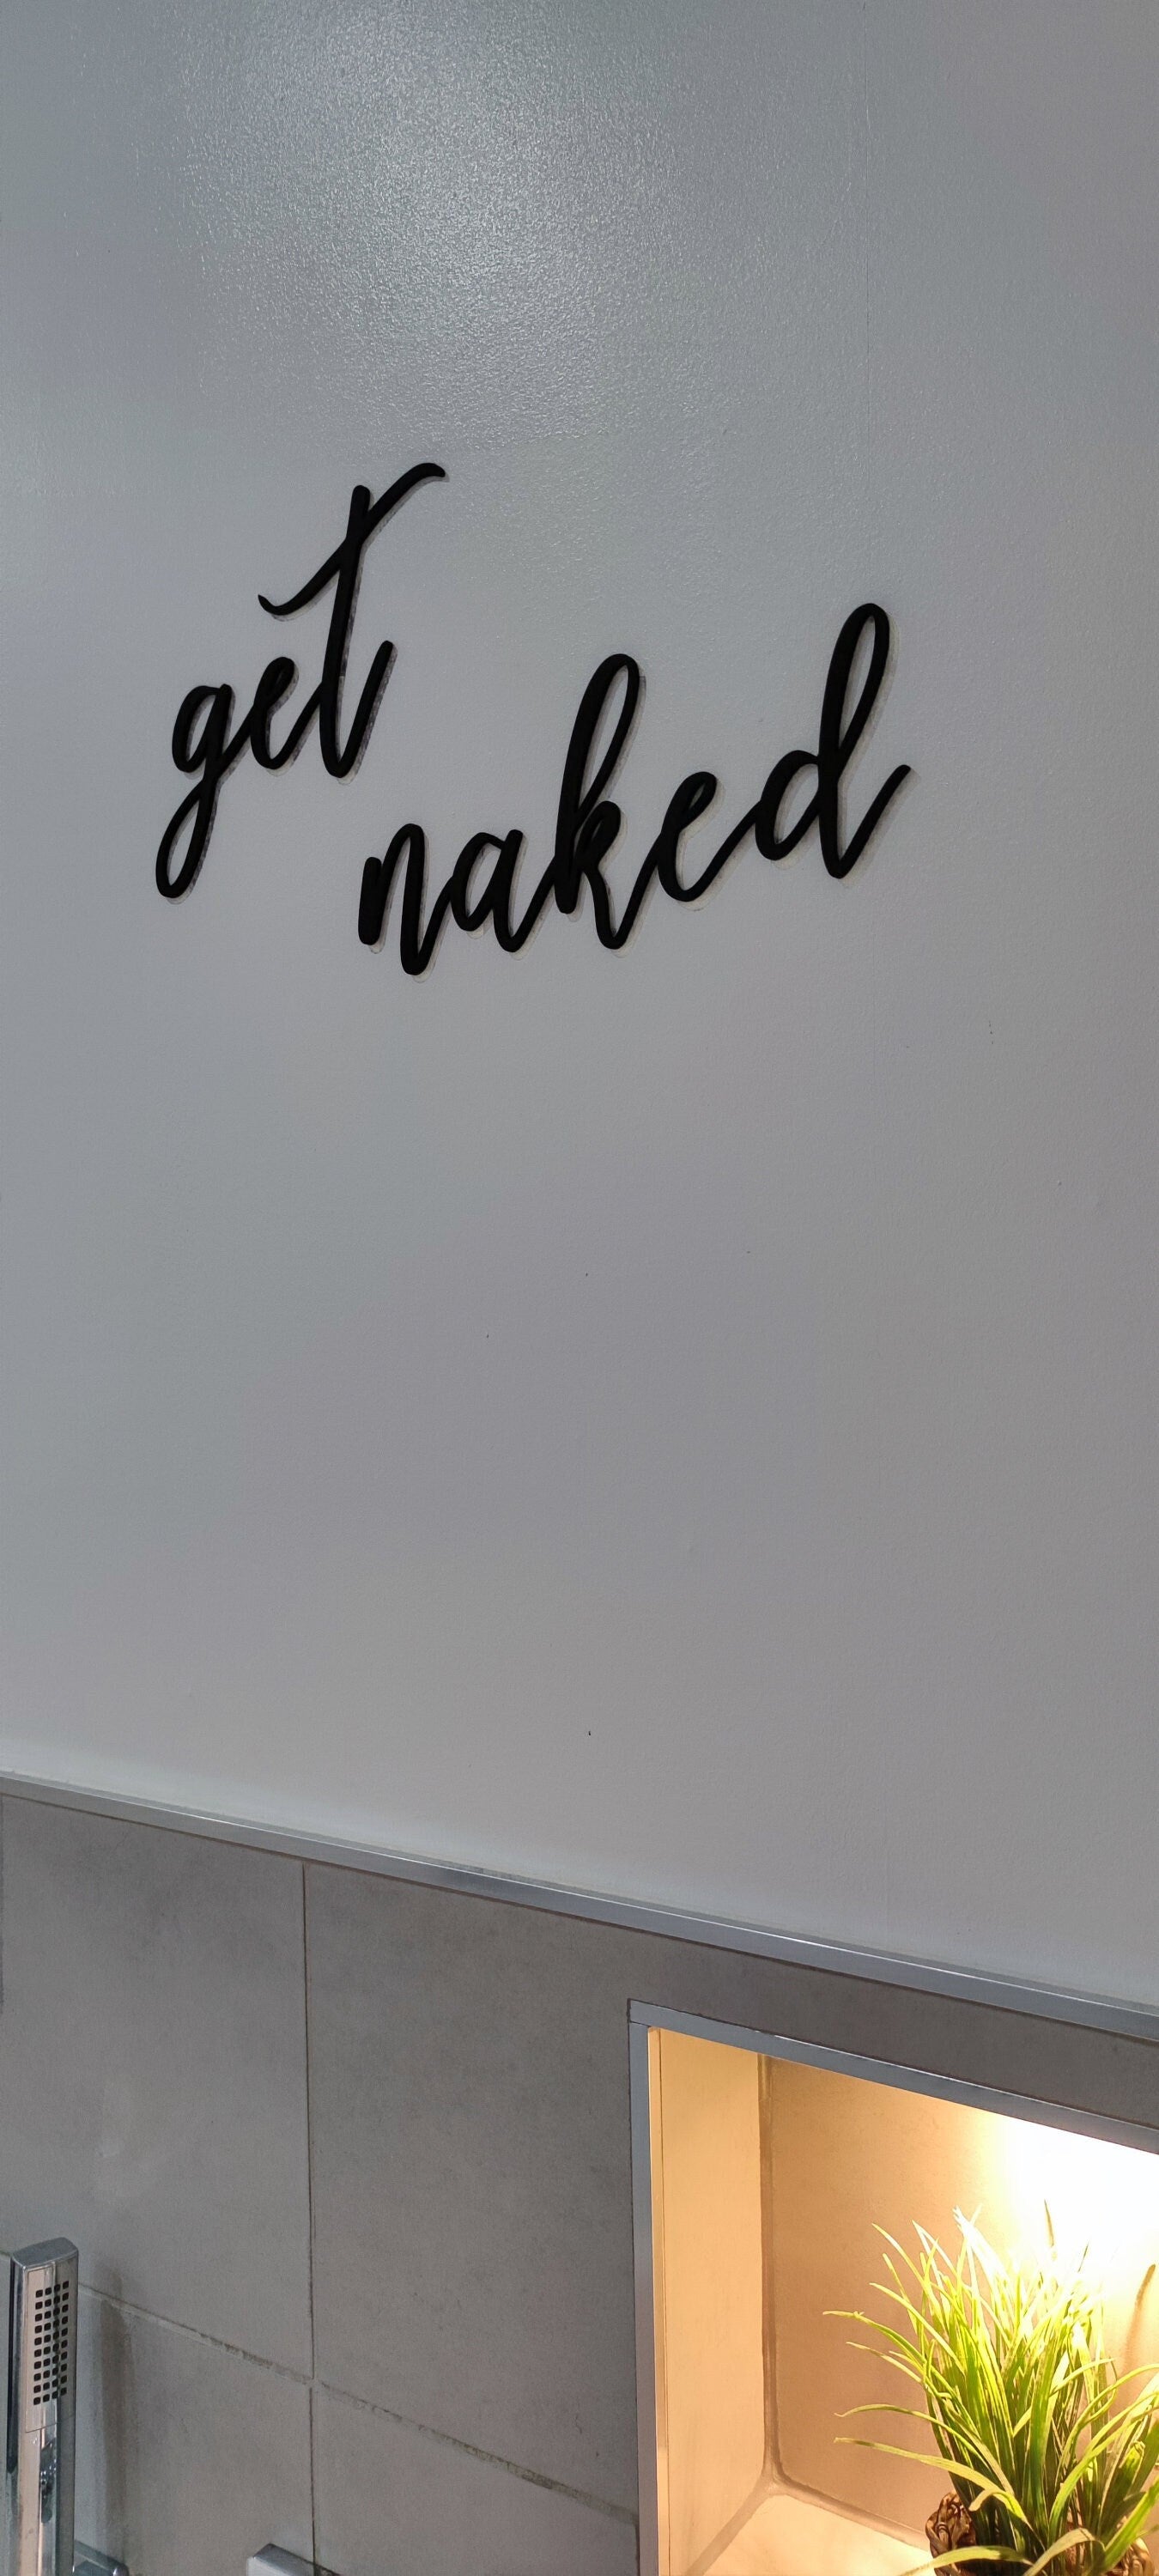 Get naked/bathroom/bathroom decoration/bathroom sign/bathroom lettering/get naked lettering/bathroom decoration/wooden lettering